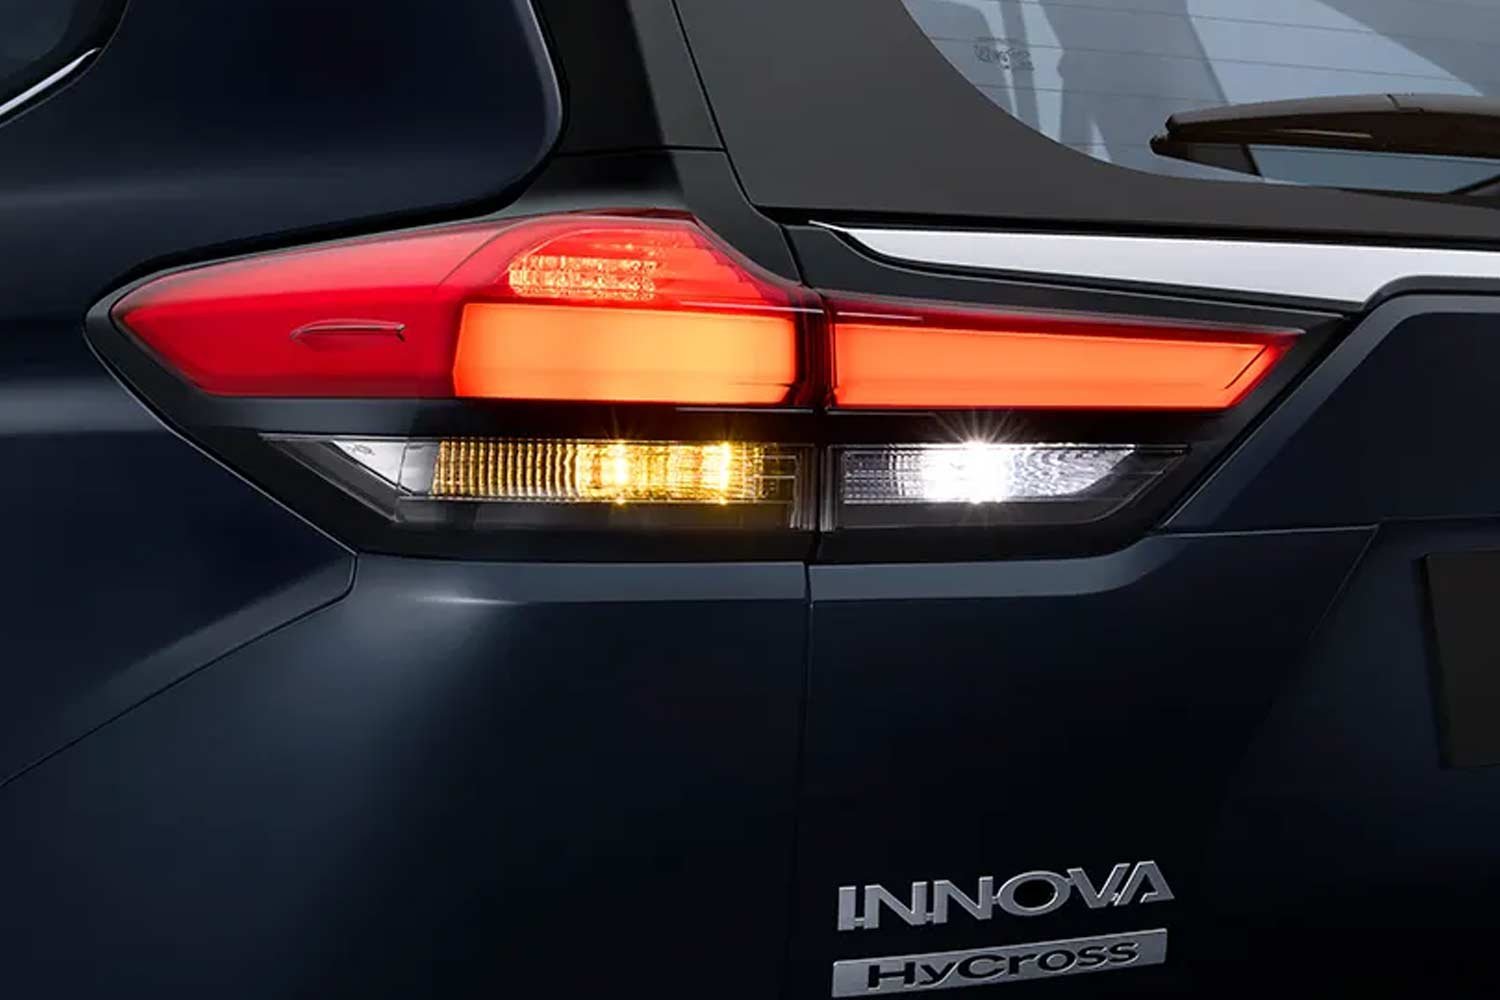 2022 Toyota Innova Hycross Led Tail Lamp - AUTOBICS